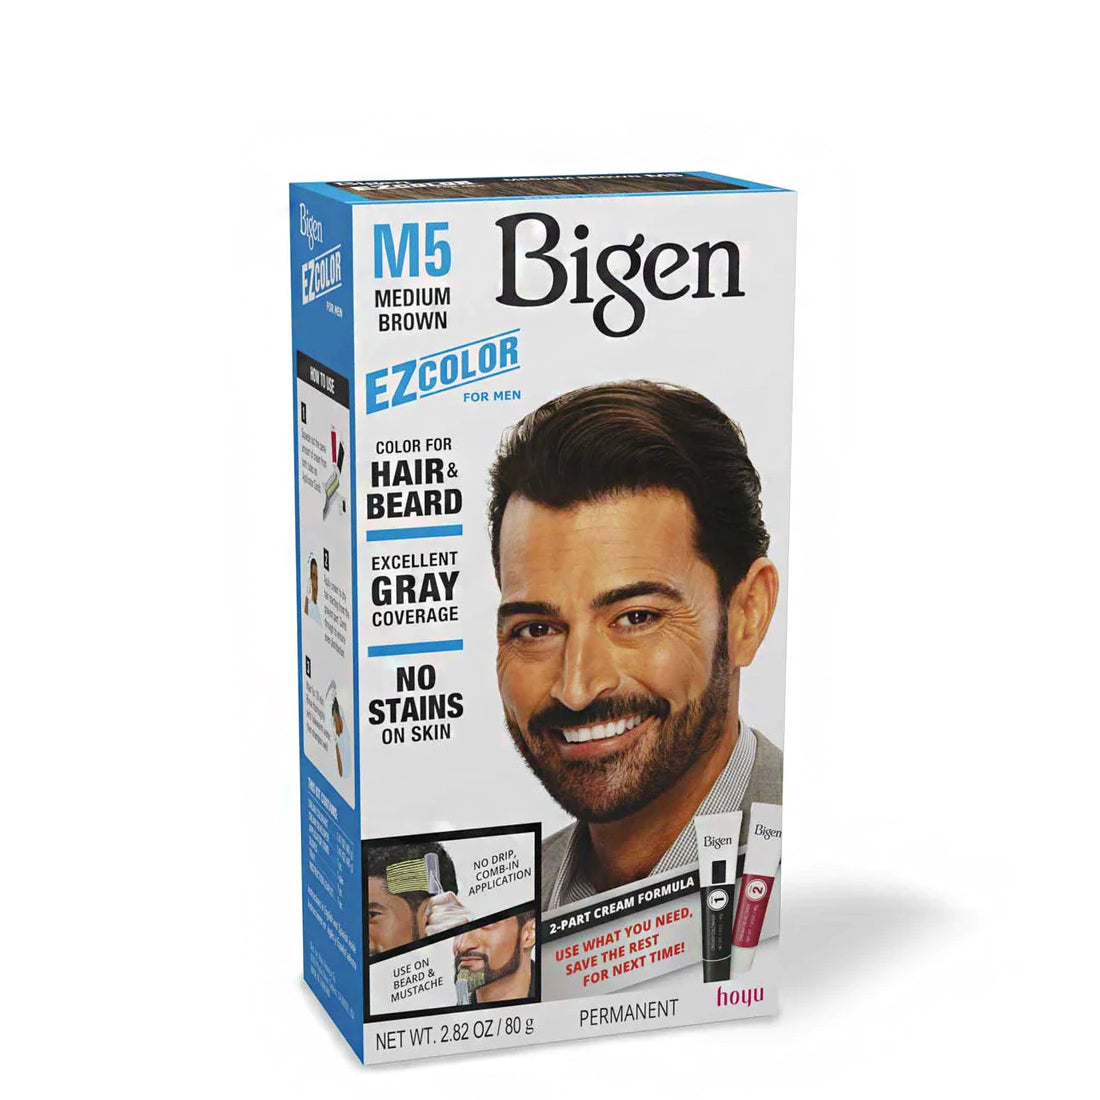 Bigen EZ Color for Men - M5 Medium Brown